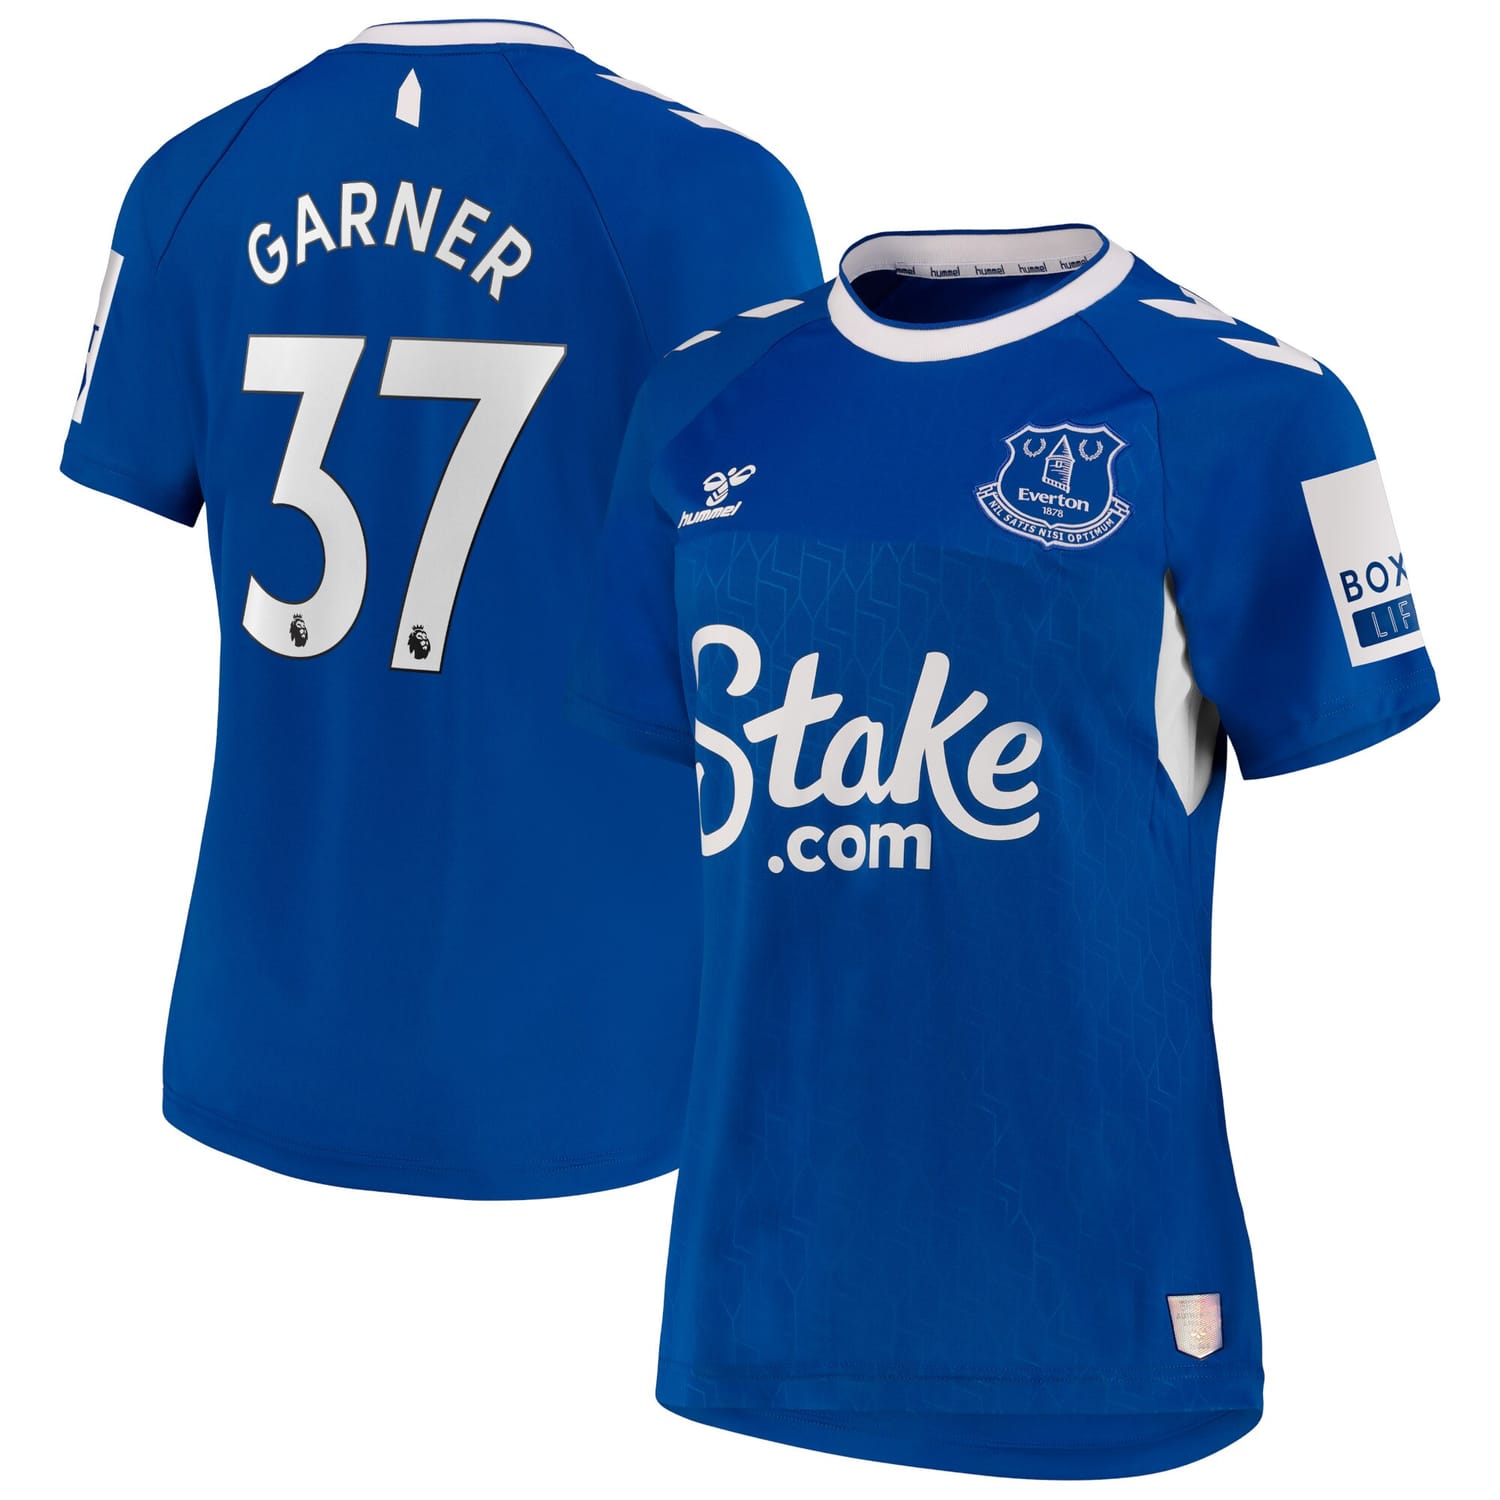 Premier League Everton Home Jersey Shirt 2022-23 player James Garner 37 printing for Women